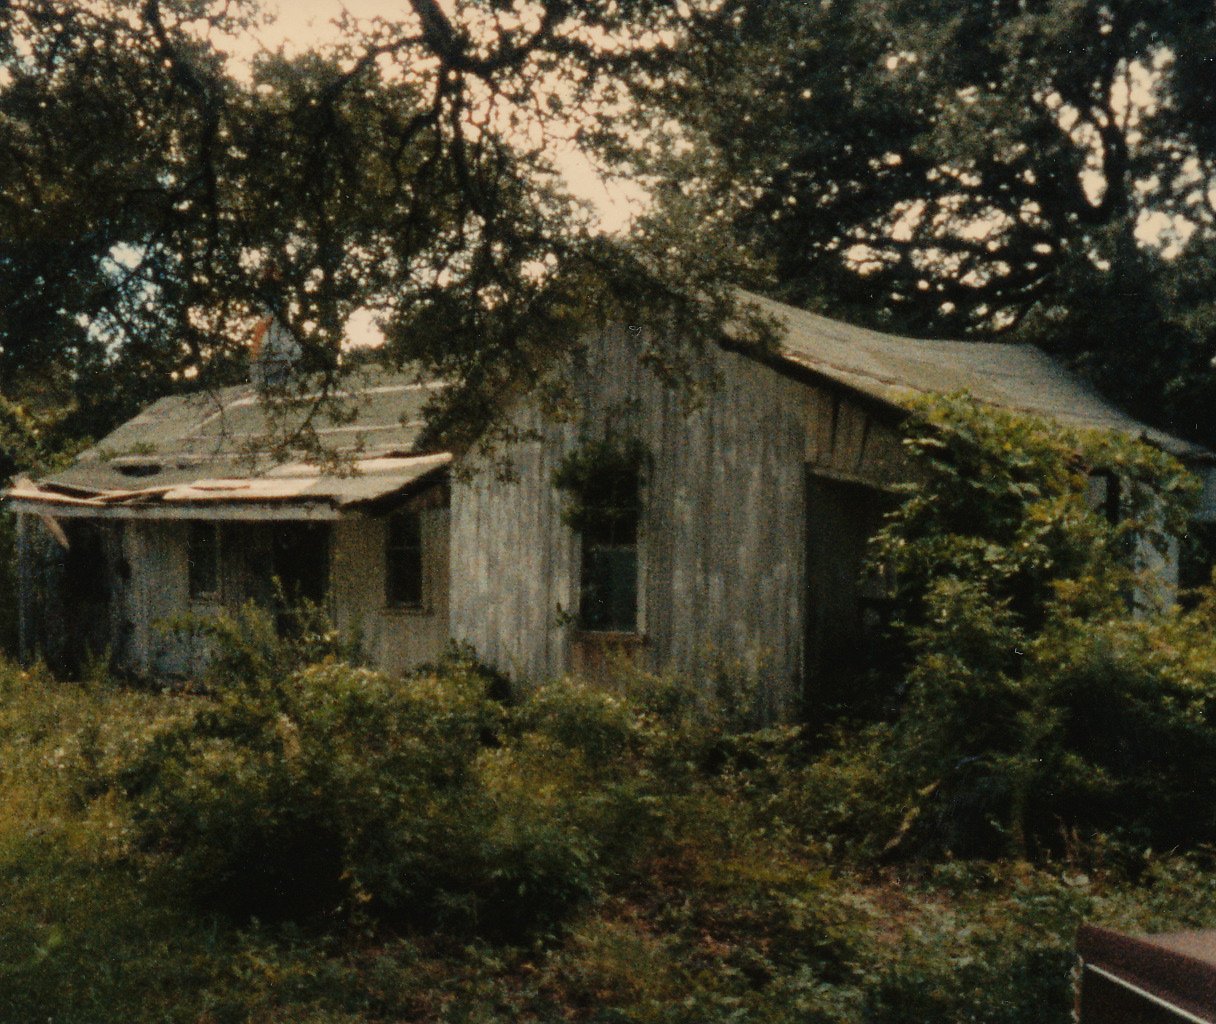 Boo Willis House, taken August 1985